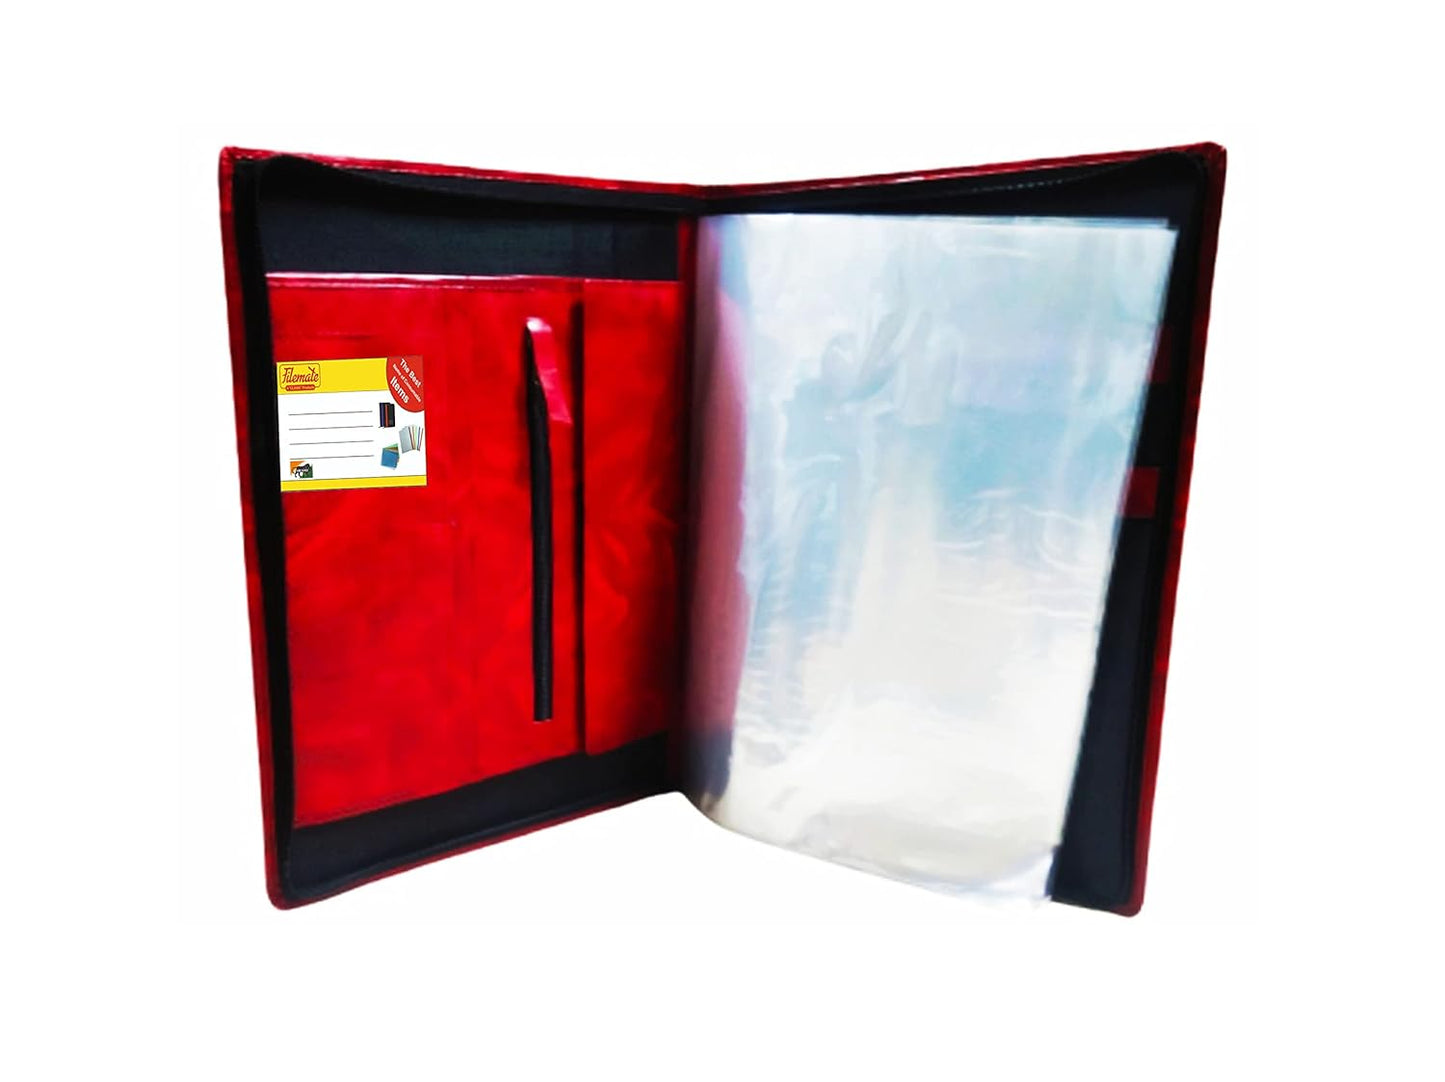 Digismart* Portfolio File Folder No.440-B4 (20 Document Sleeves) / Executive Folder/Conference Folder/Portfolio Chain Bag/Document Bag (B4 or Degree Size: 16 X 11 inch) Red, Brown Color